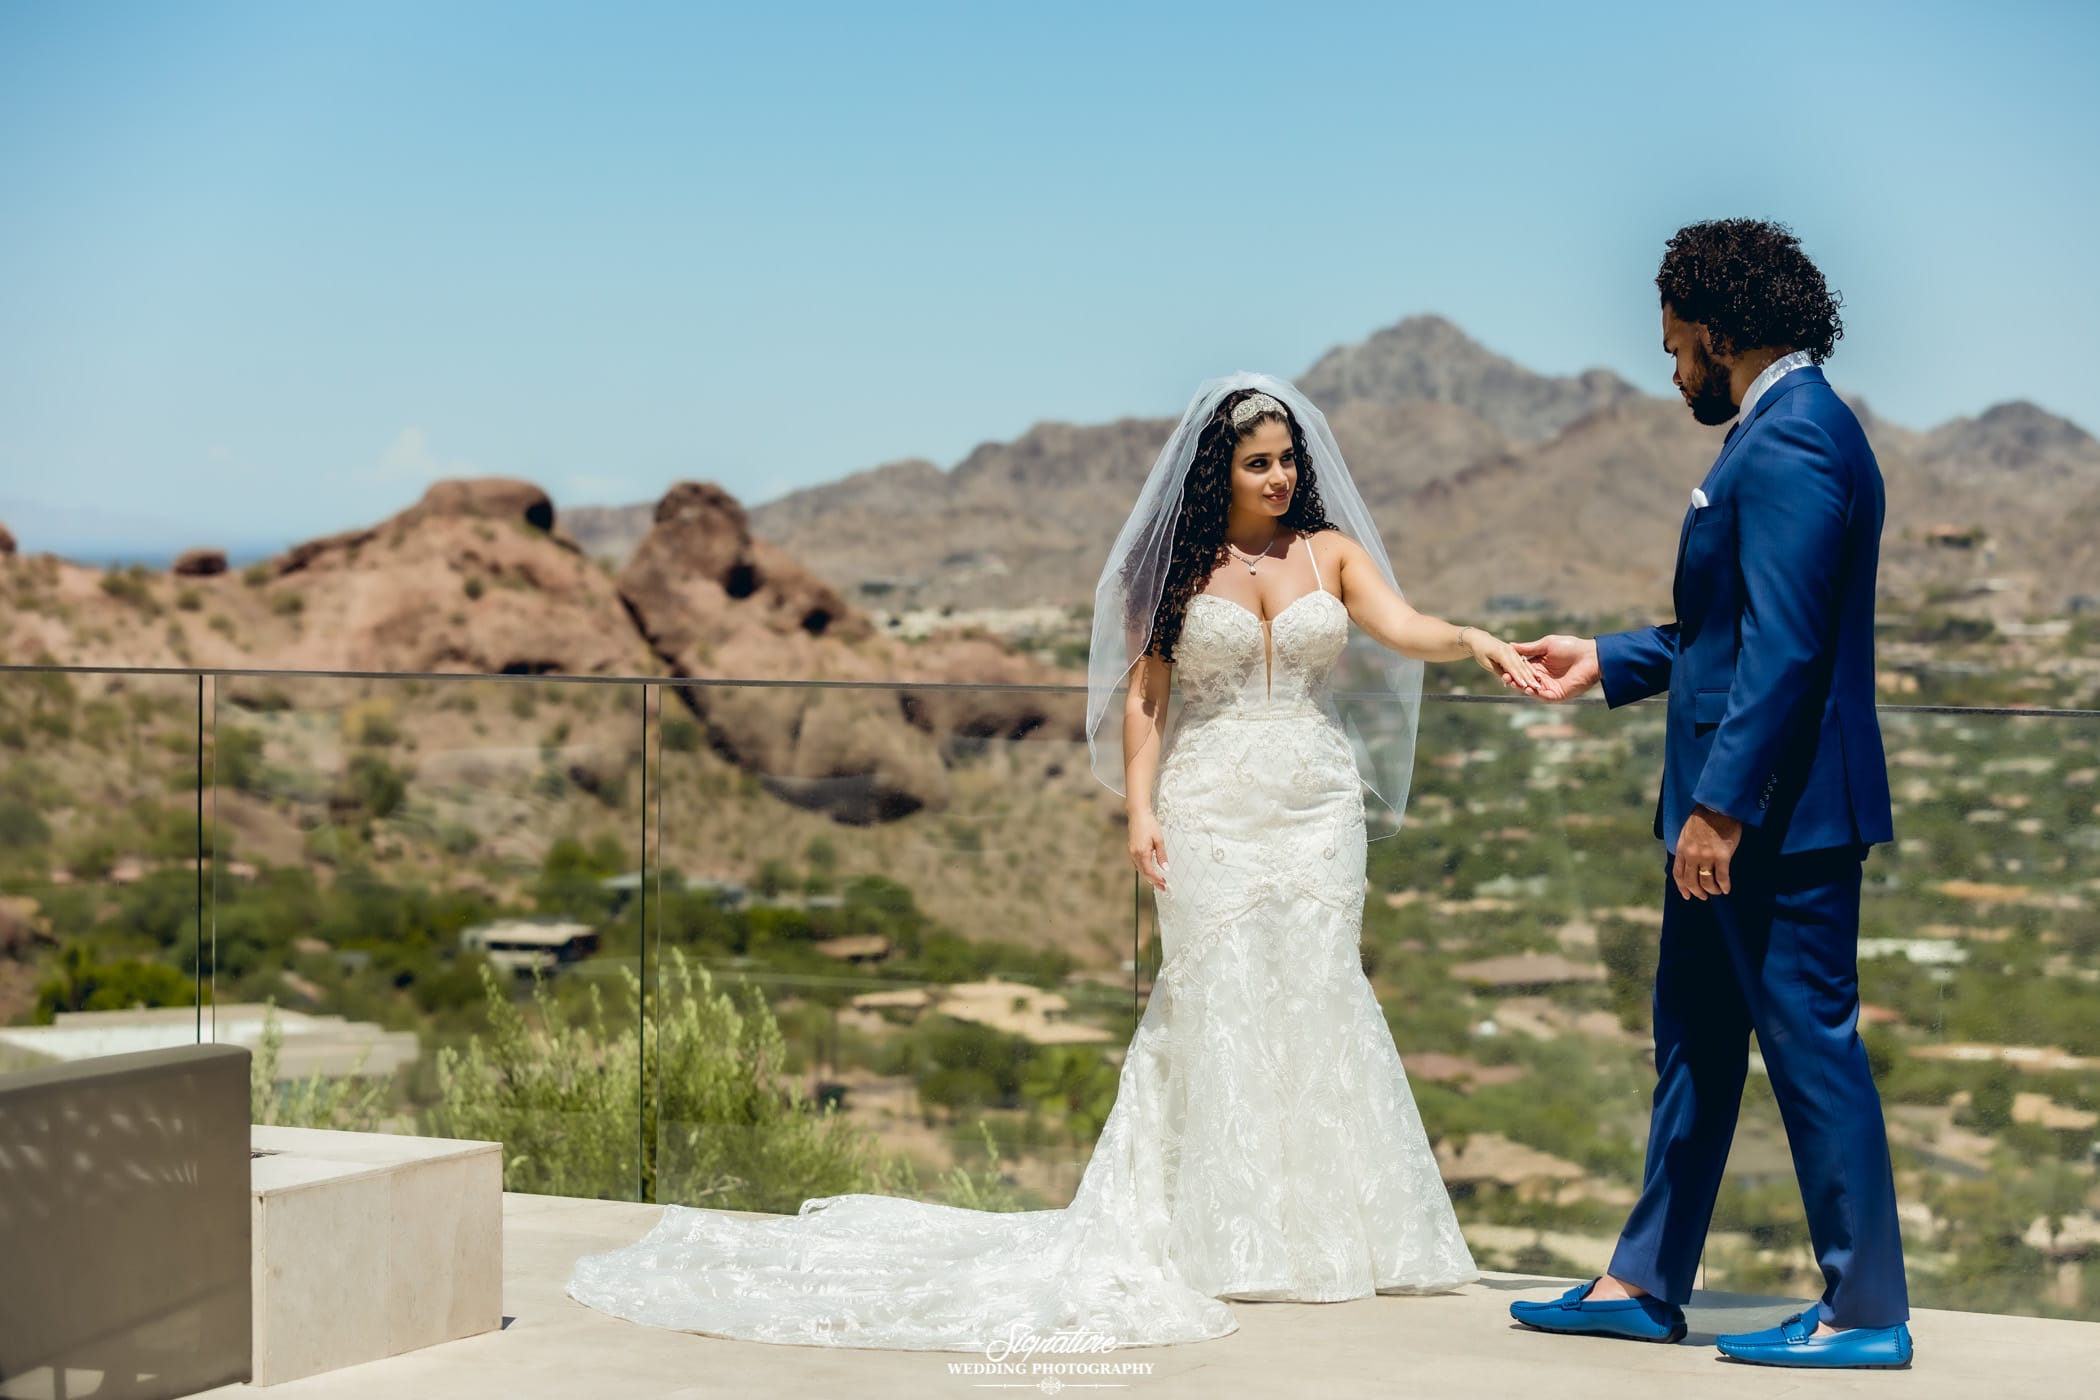 Bride and groom holding hands on balcony in desert